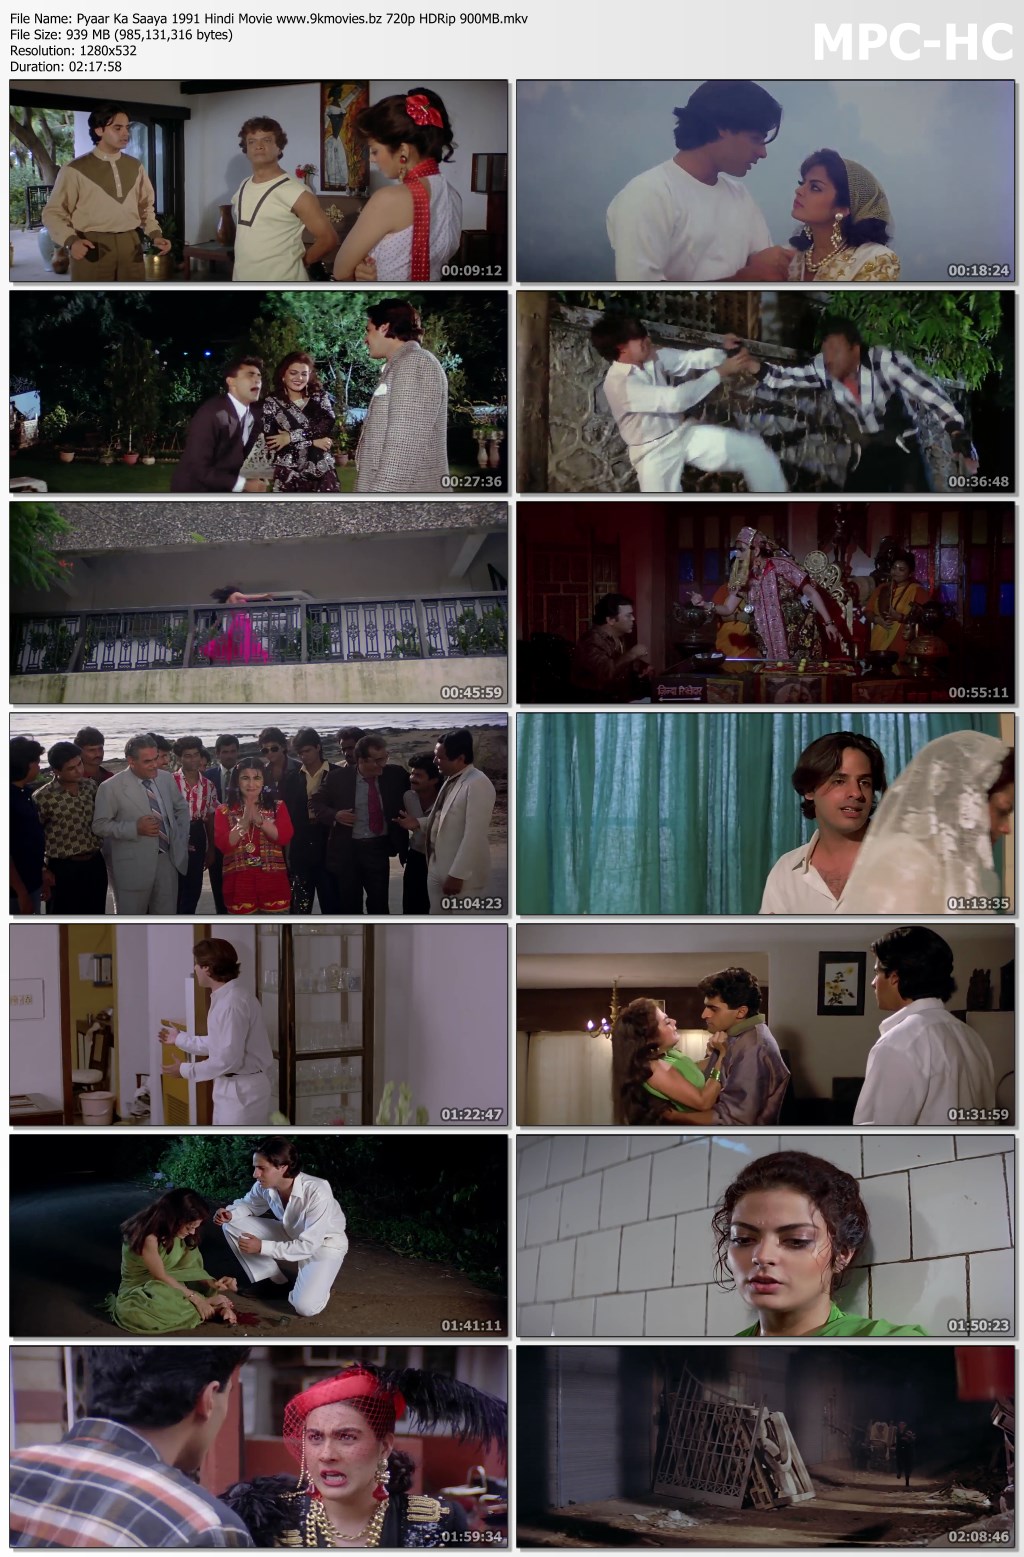 Pyaar Ka Saaya 1991 Hindi Movie 720p HDRip 945MB Download - 1kMovies